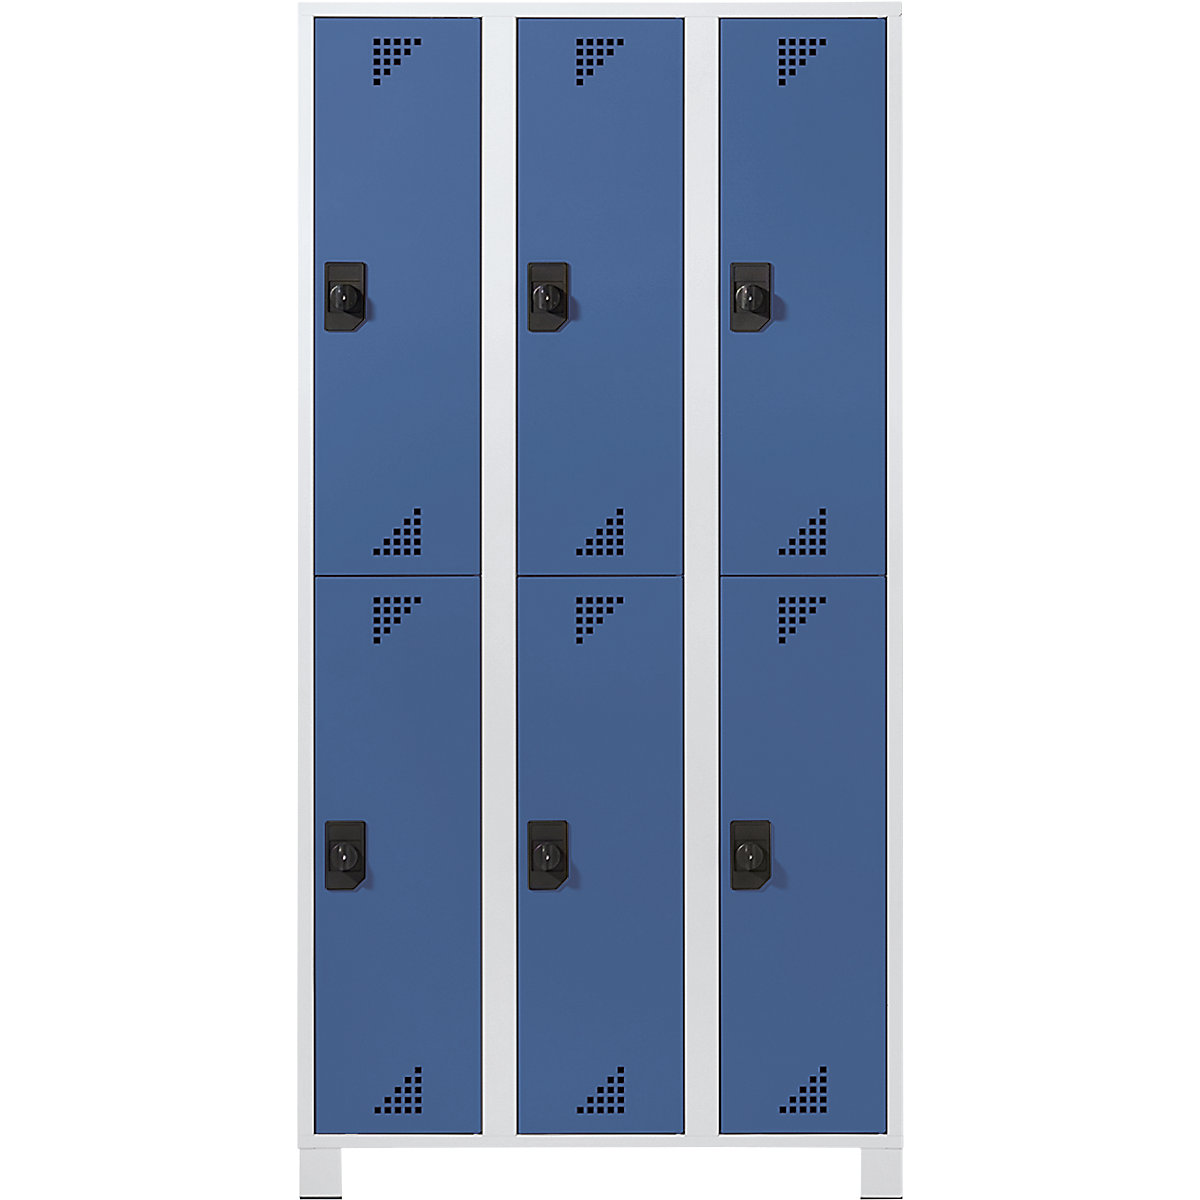 Cloakroom locker with half-height compartments – eurokraft pro, HxWxD 1800 x 900 x 500 mm, 6 compartments, light grey body, brilliant blue doors-5